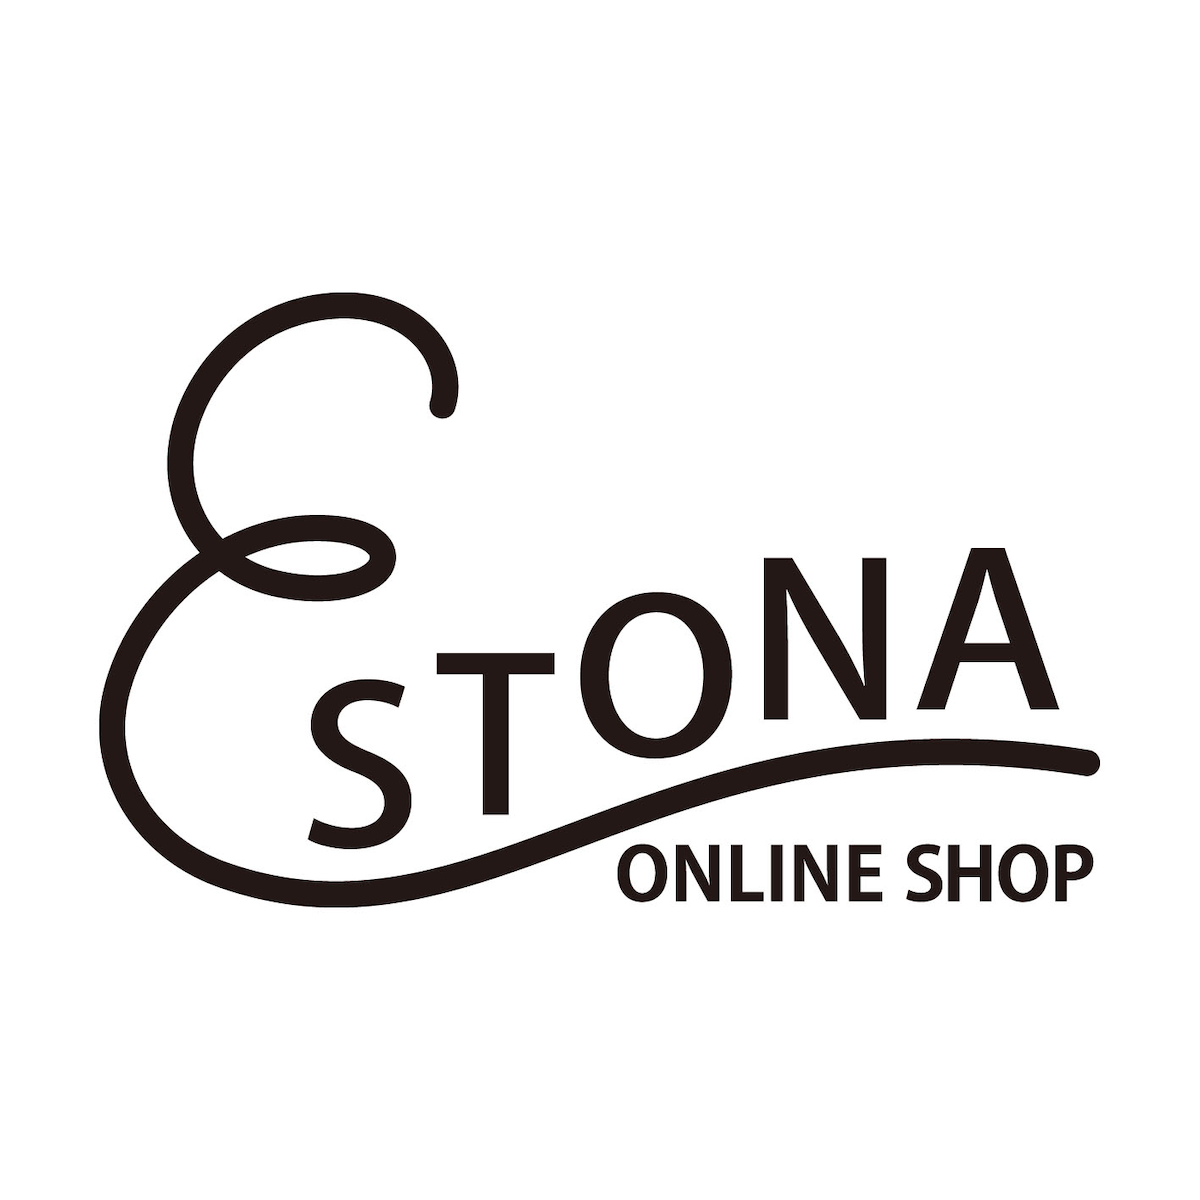 CHRISTMAS GIFT | Estona Online Shop 